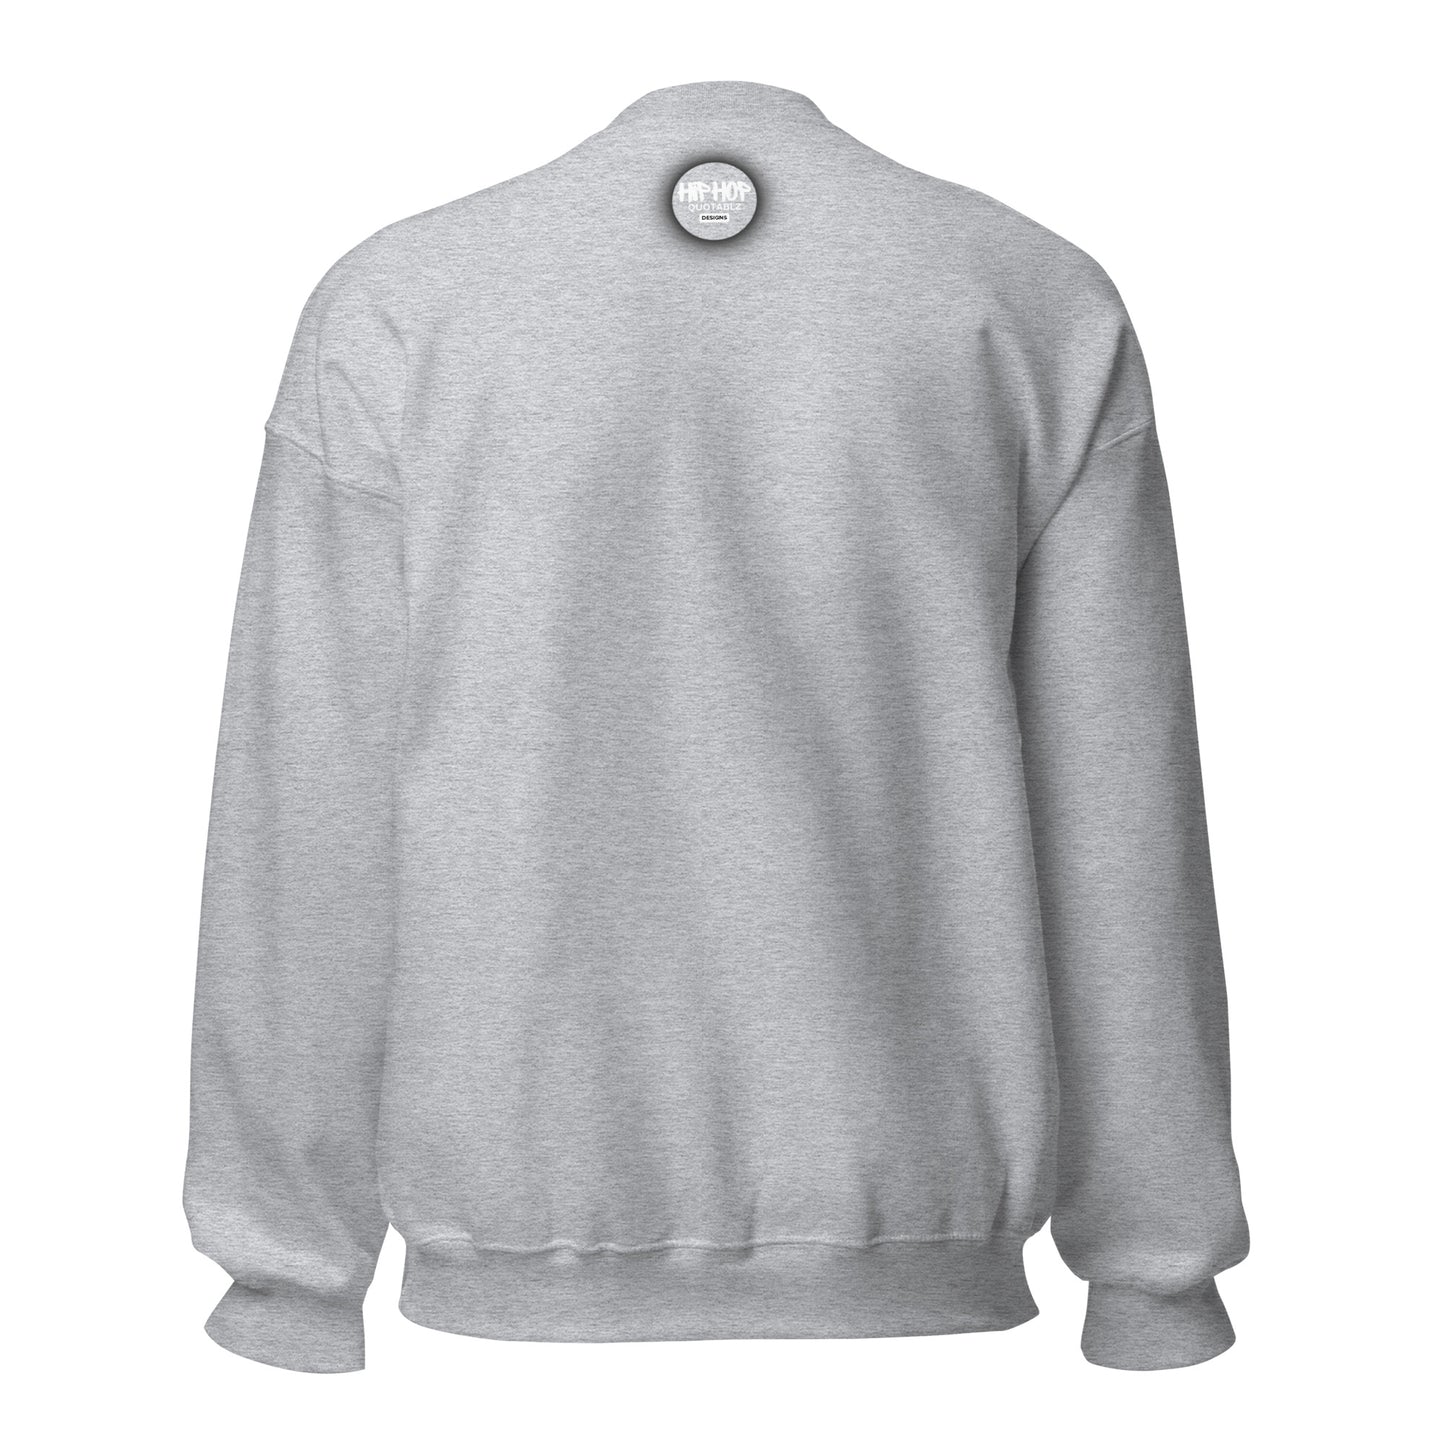 KATT for PREZ Unisex Sweatshirt